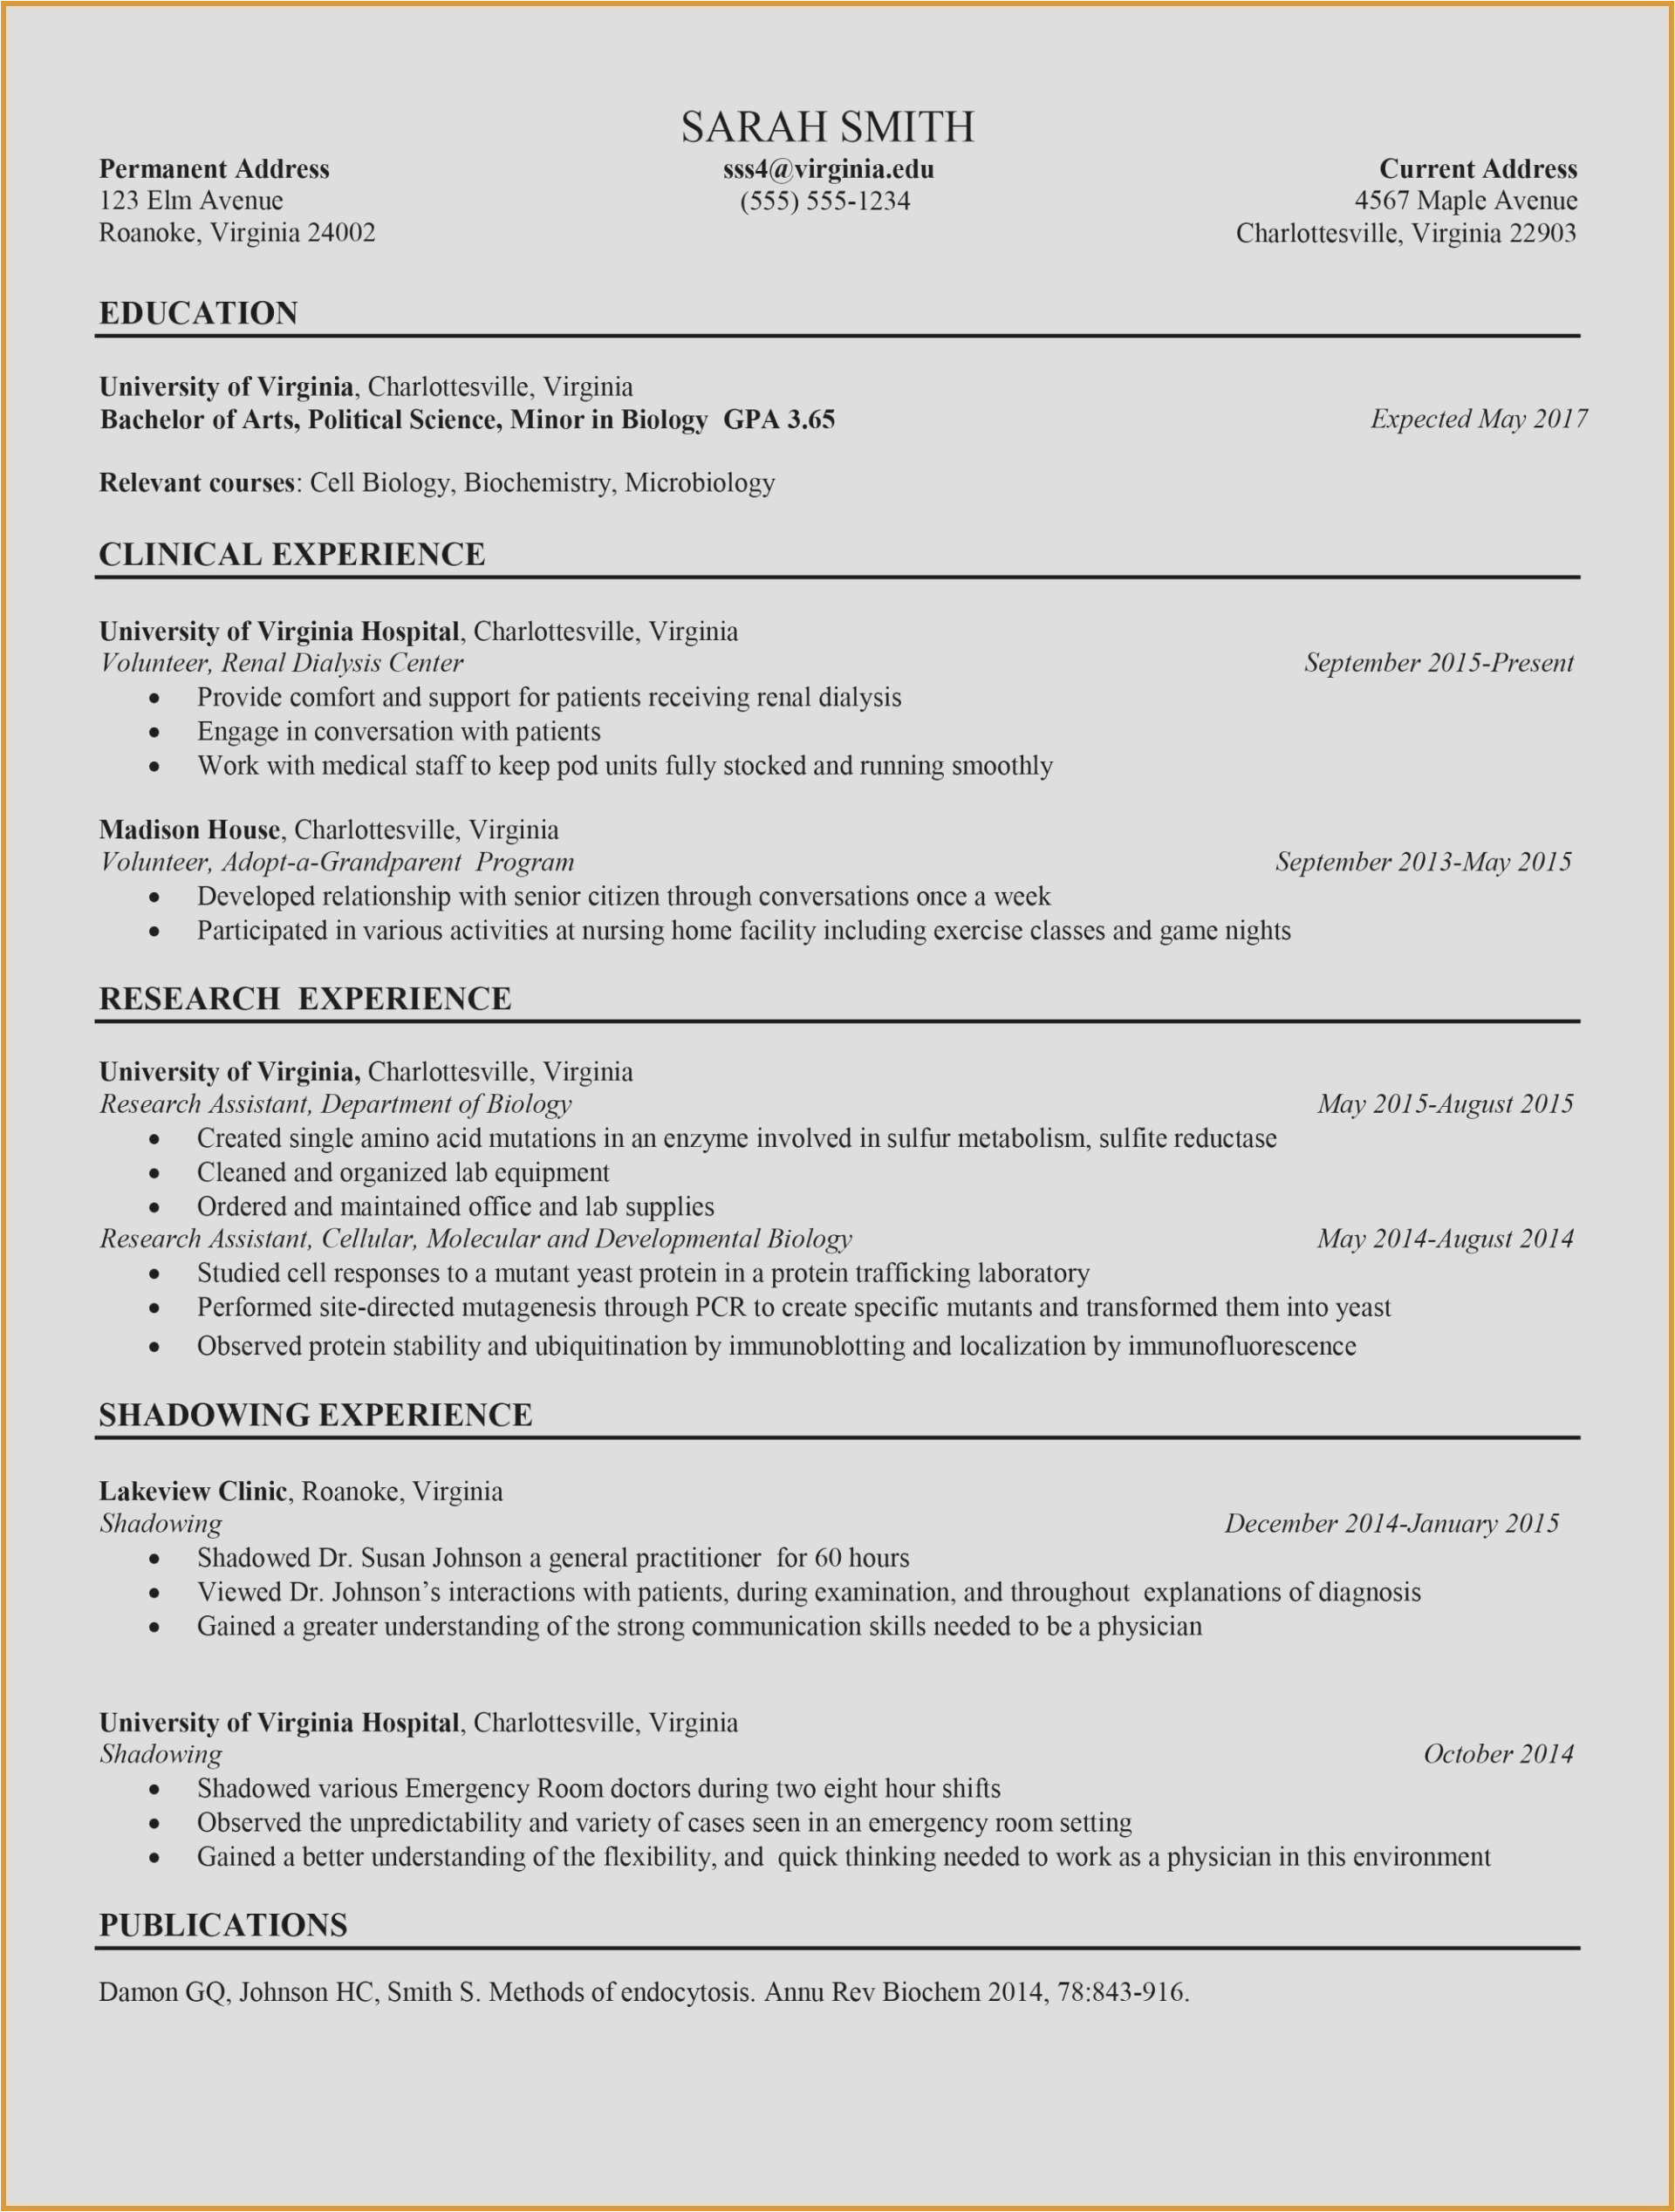 Sample Resume for Fresh Graduate Nurses with No Experience New Grad Nursing Resume Clinical Experience Fresh 14